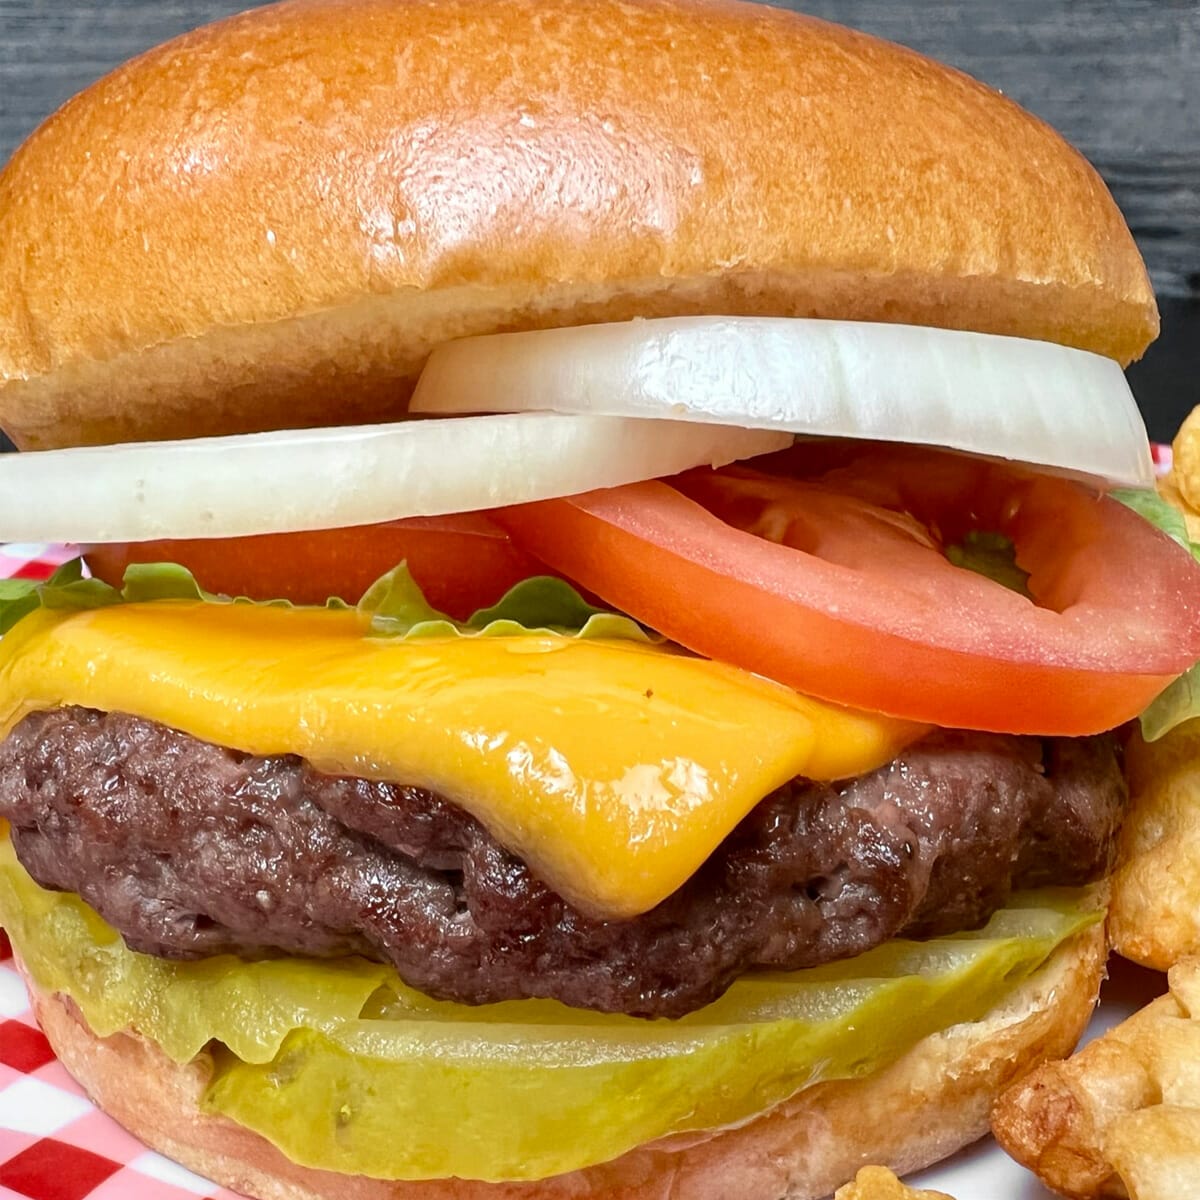 Burgers In Air Fryer - Super Easy Recipe! - Daisies & Pie